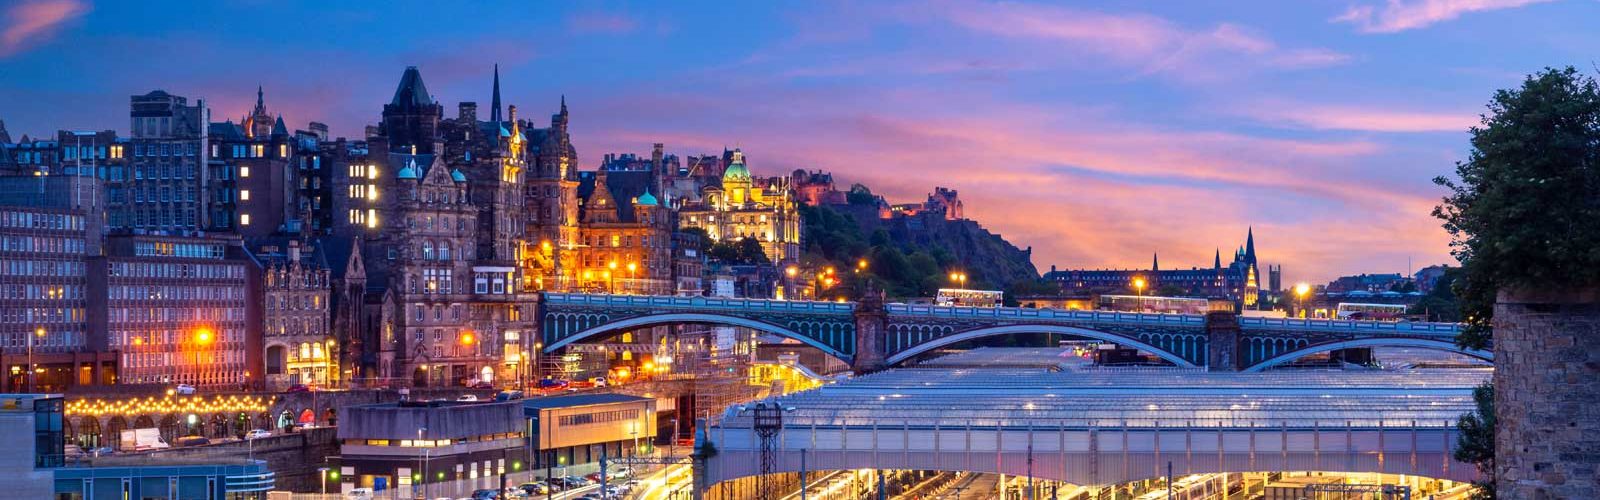 Beautiful evening view of Edinburgh Waverley Station